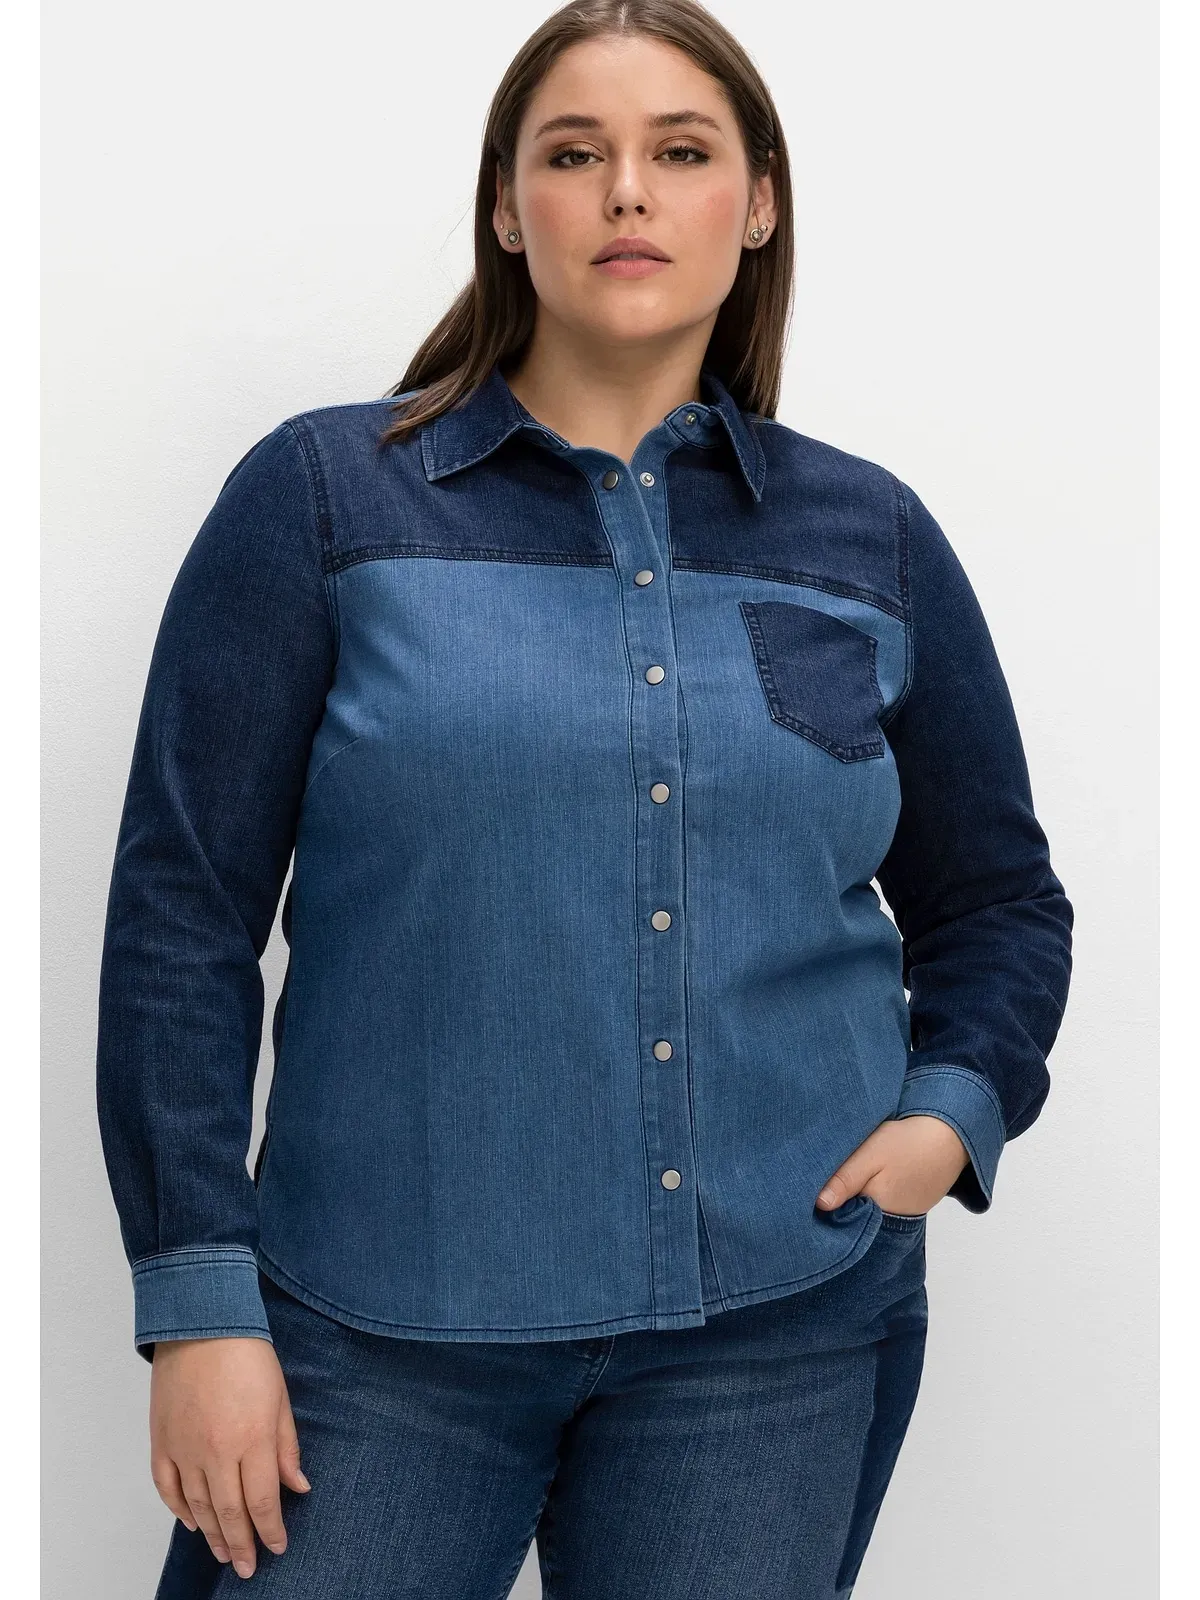 Jeansbluse SHEEGO "Große Größen" Gr. 50, blau (blue denim) Damen Blusen langarm